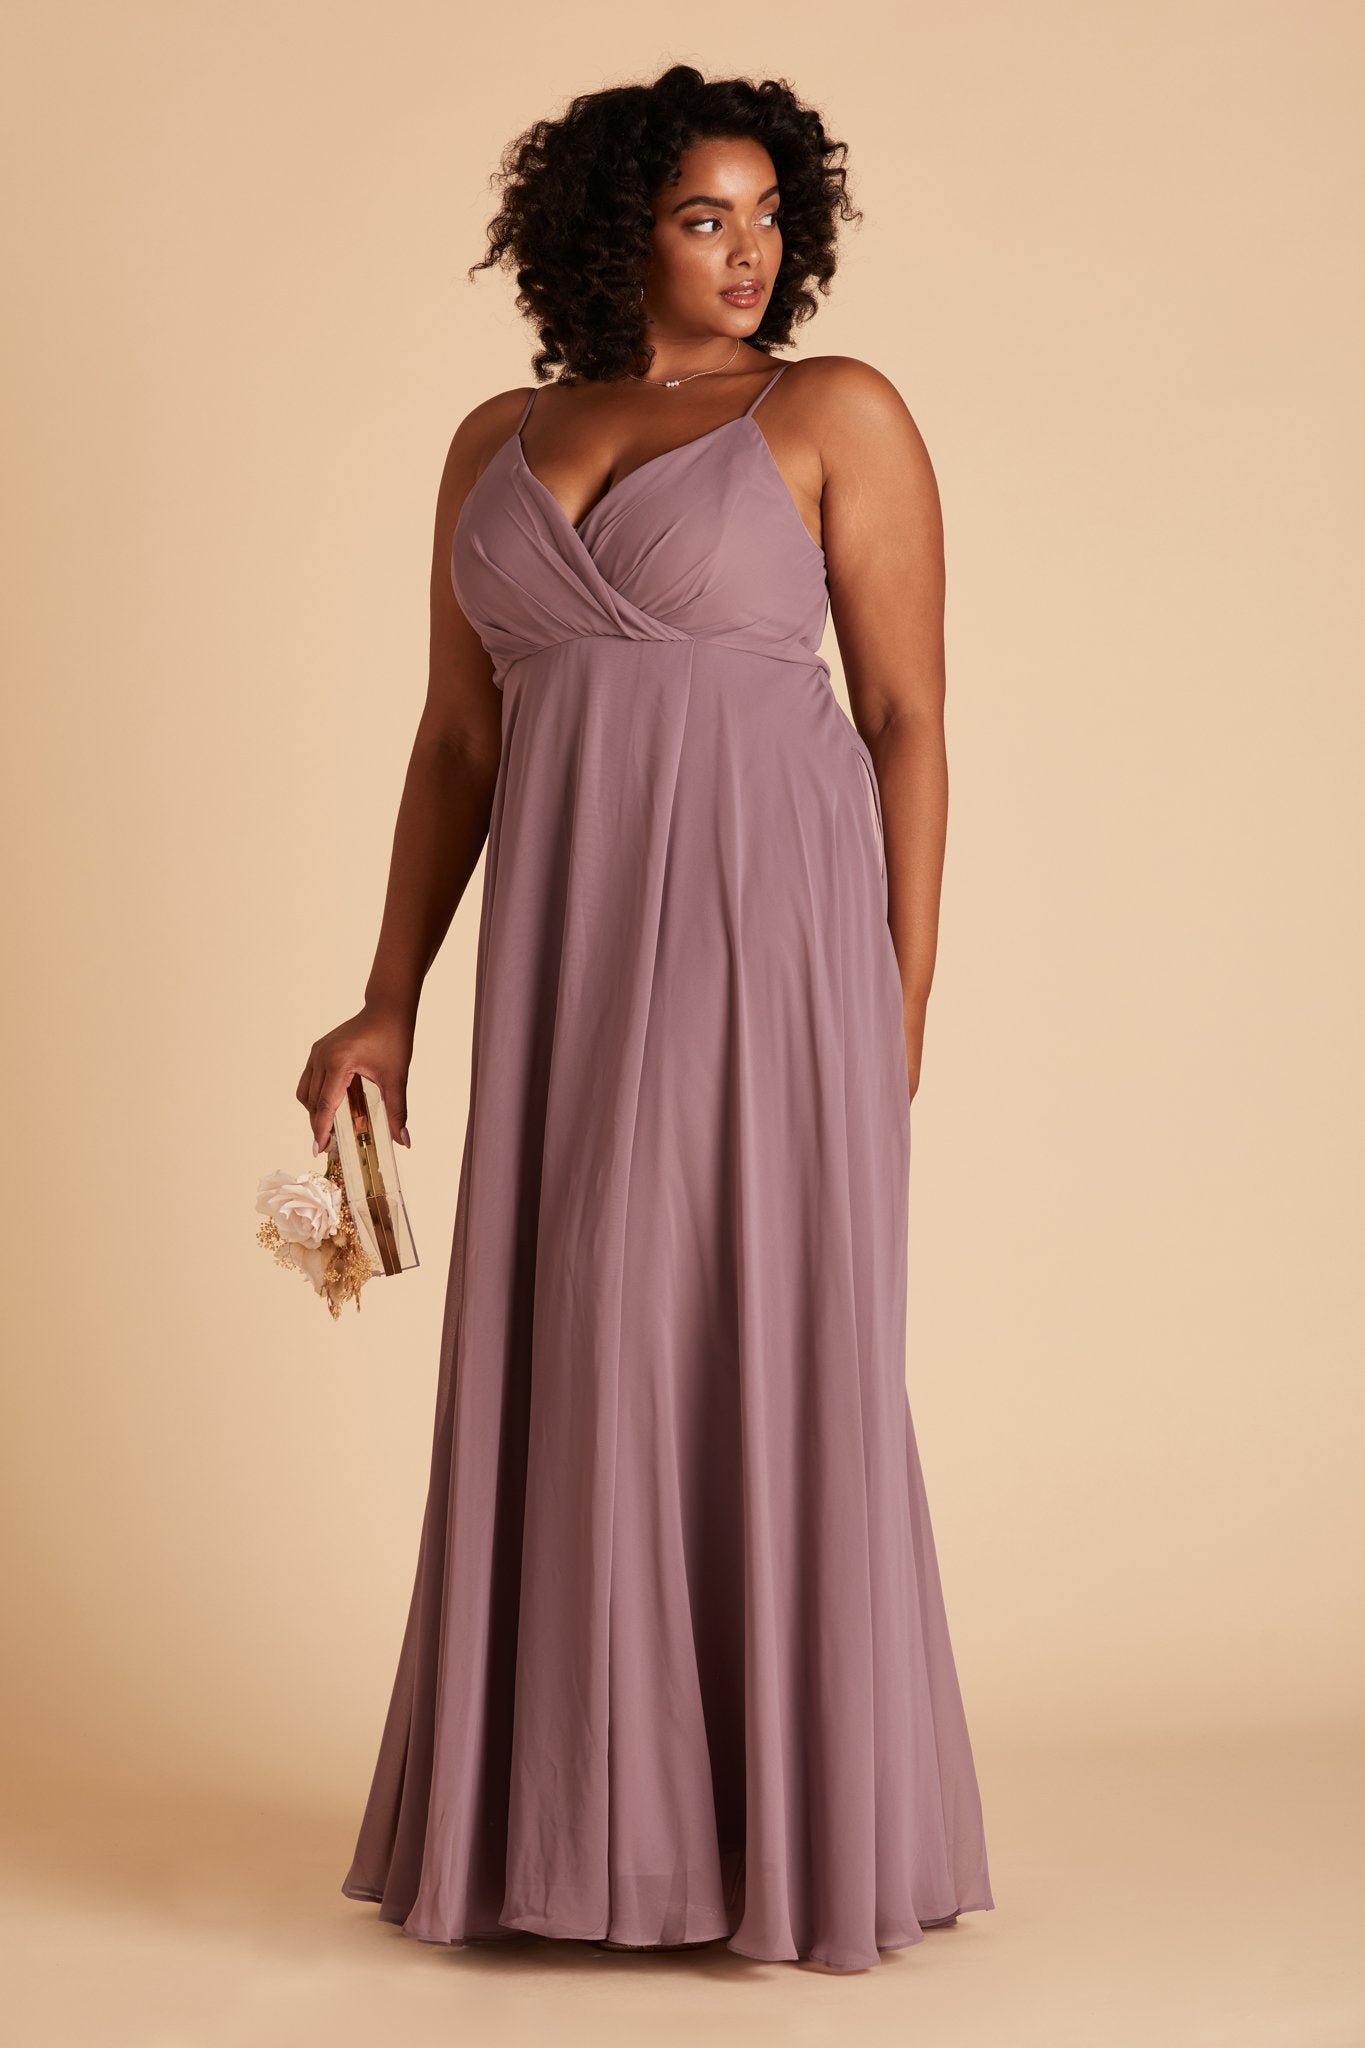 Kaia plus size bridesmaids dress in dark mauve purple chiffon by Birdy Grey, front view